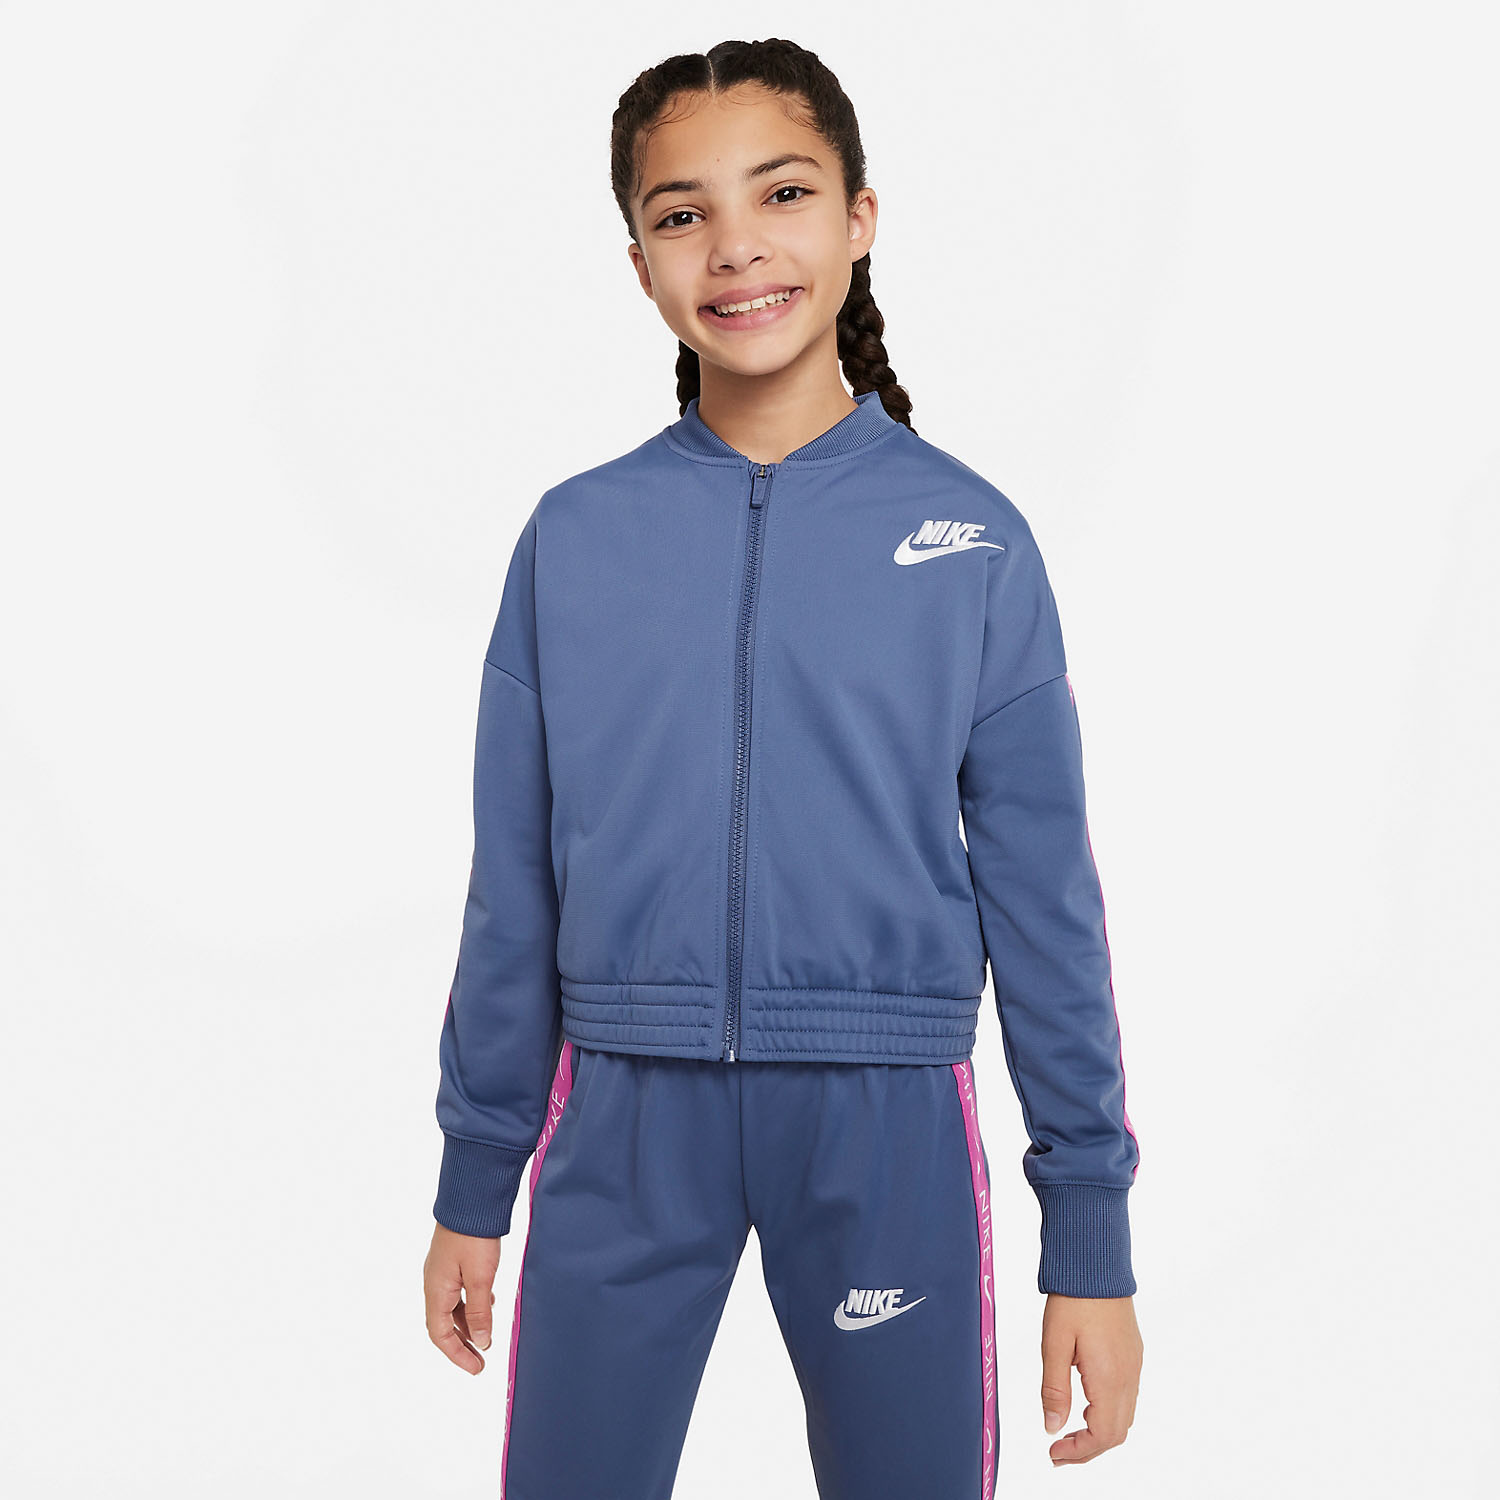 Nike Classic Girl\'s Tennis Bodysuit Diffused Blue/Active Fuchsia